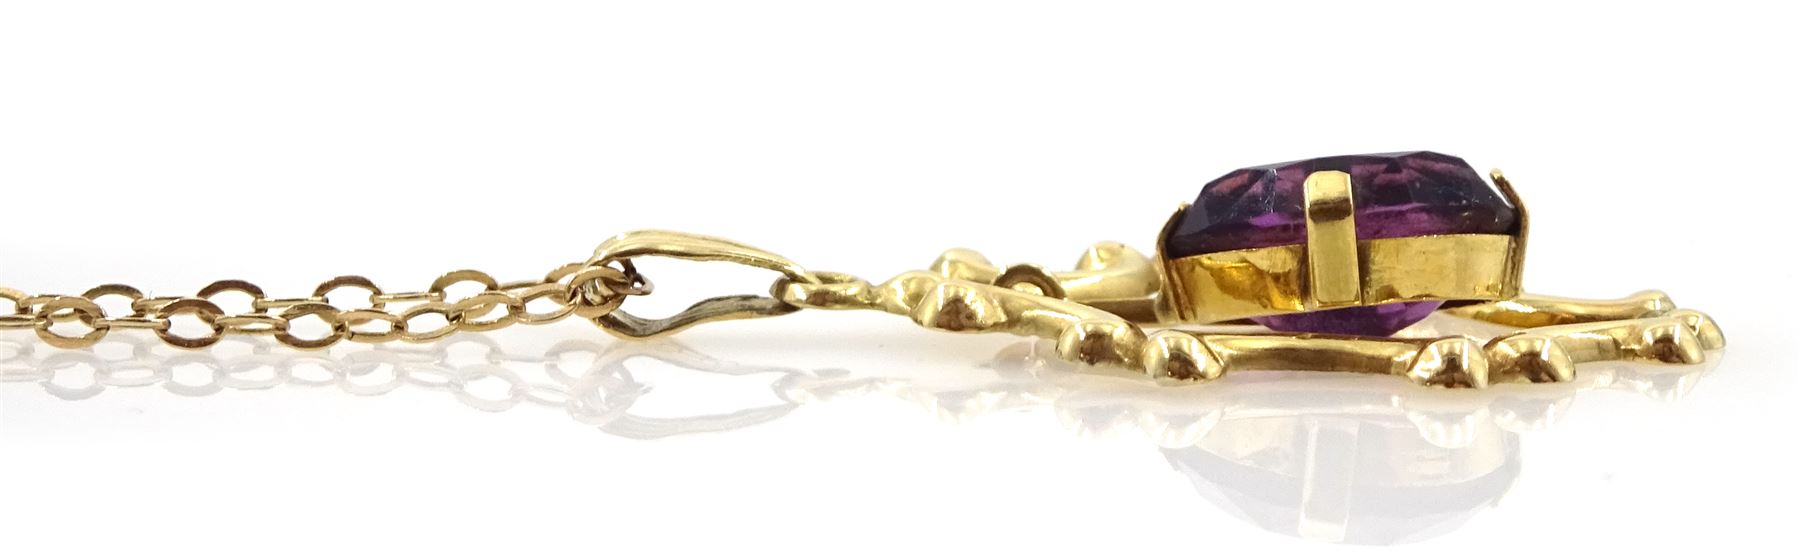 Gold amethyst pendant - Image 2 of 4